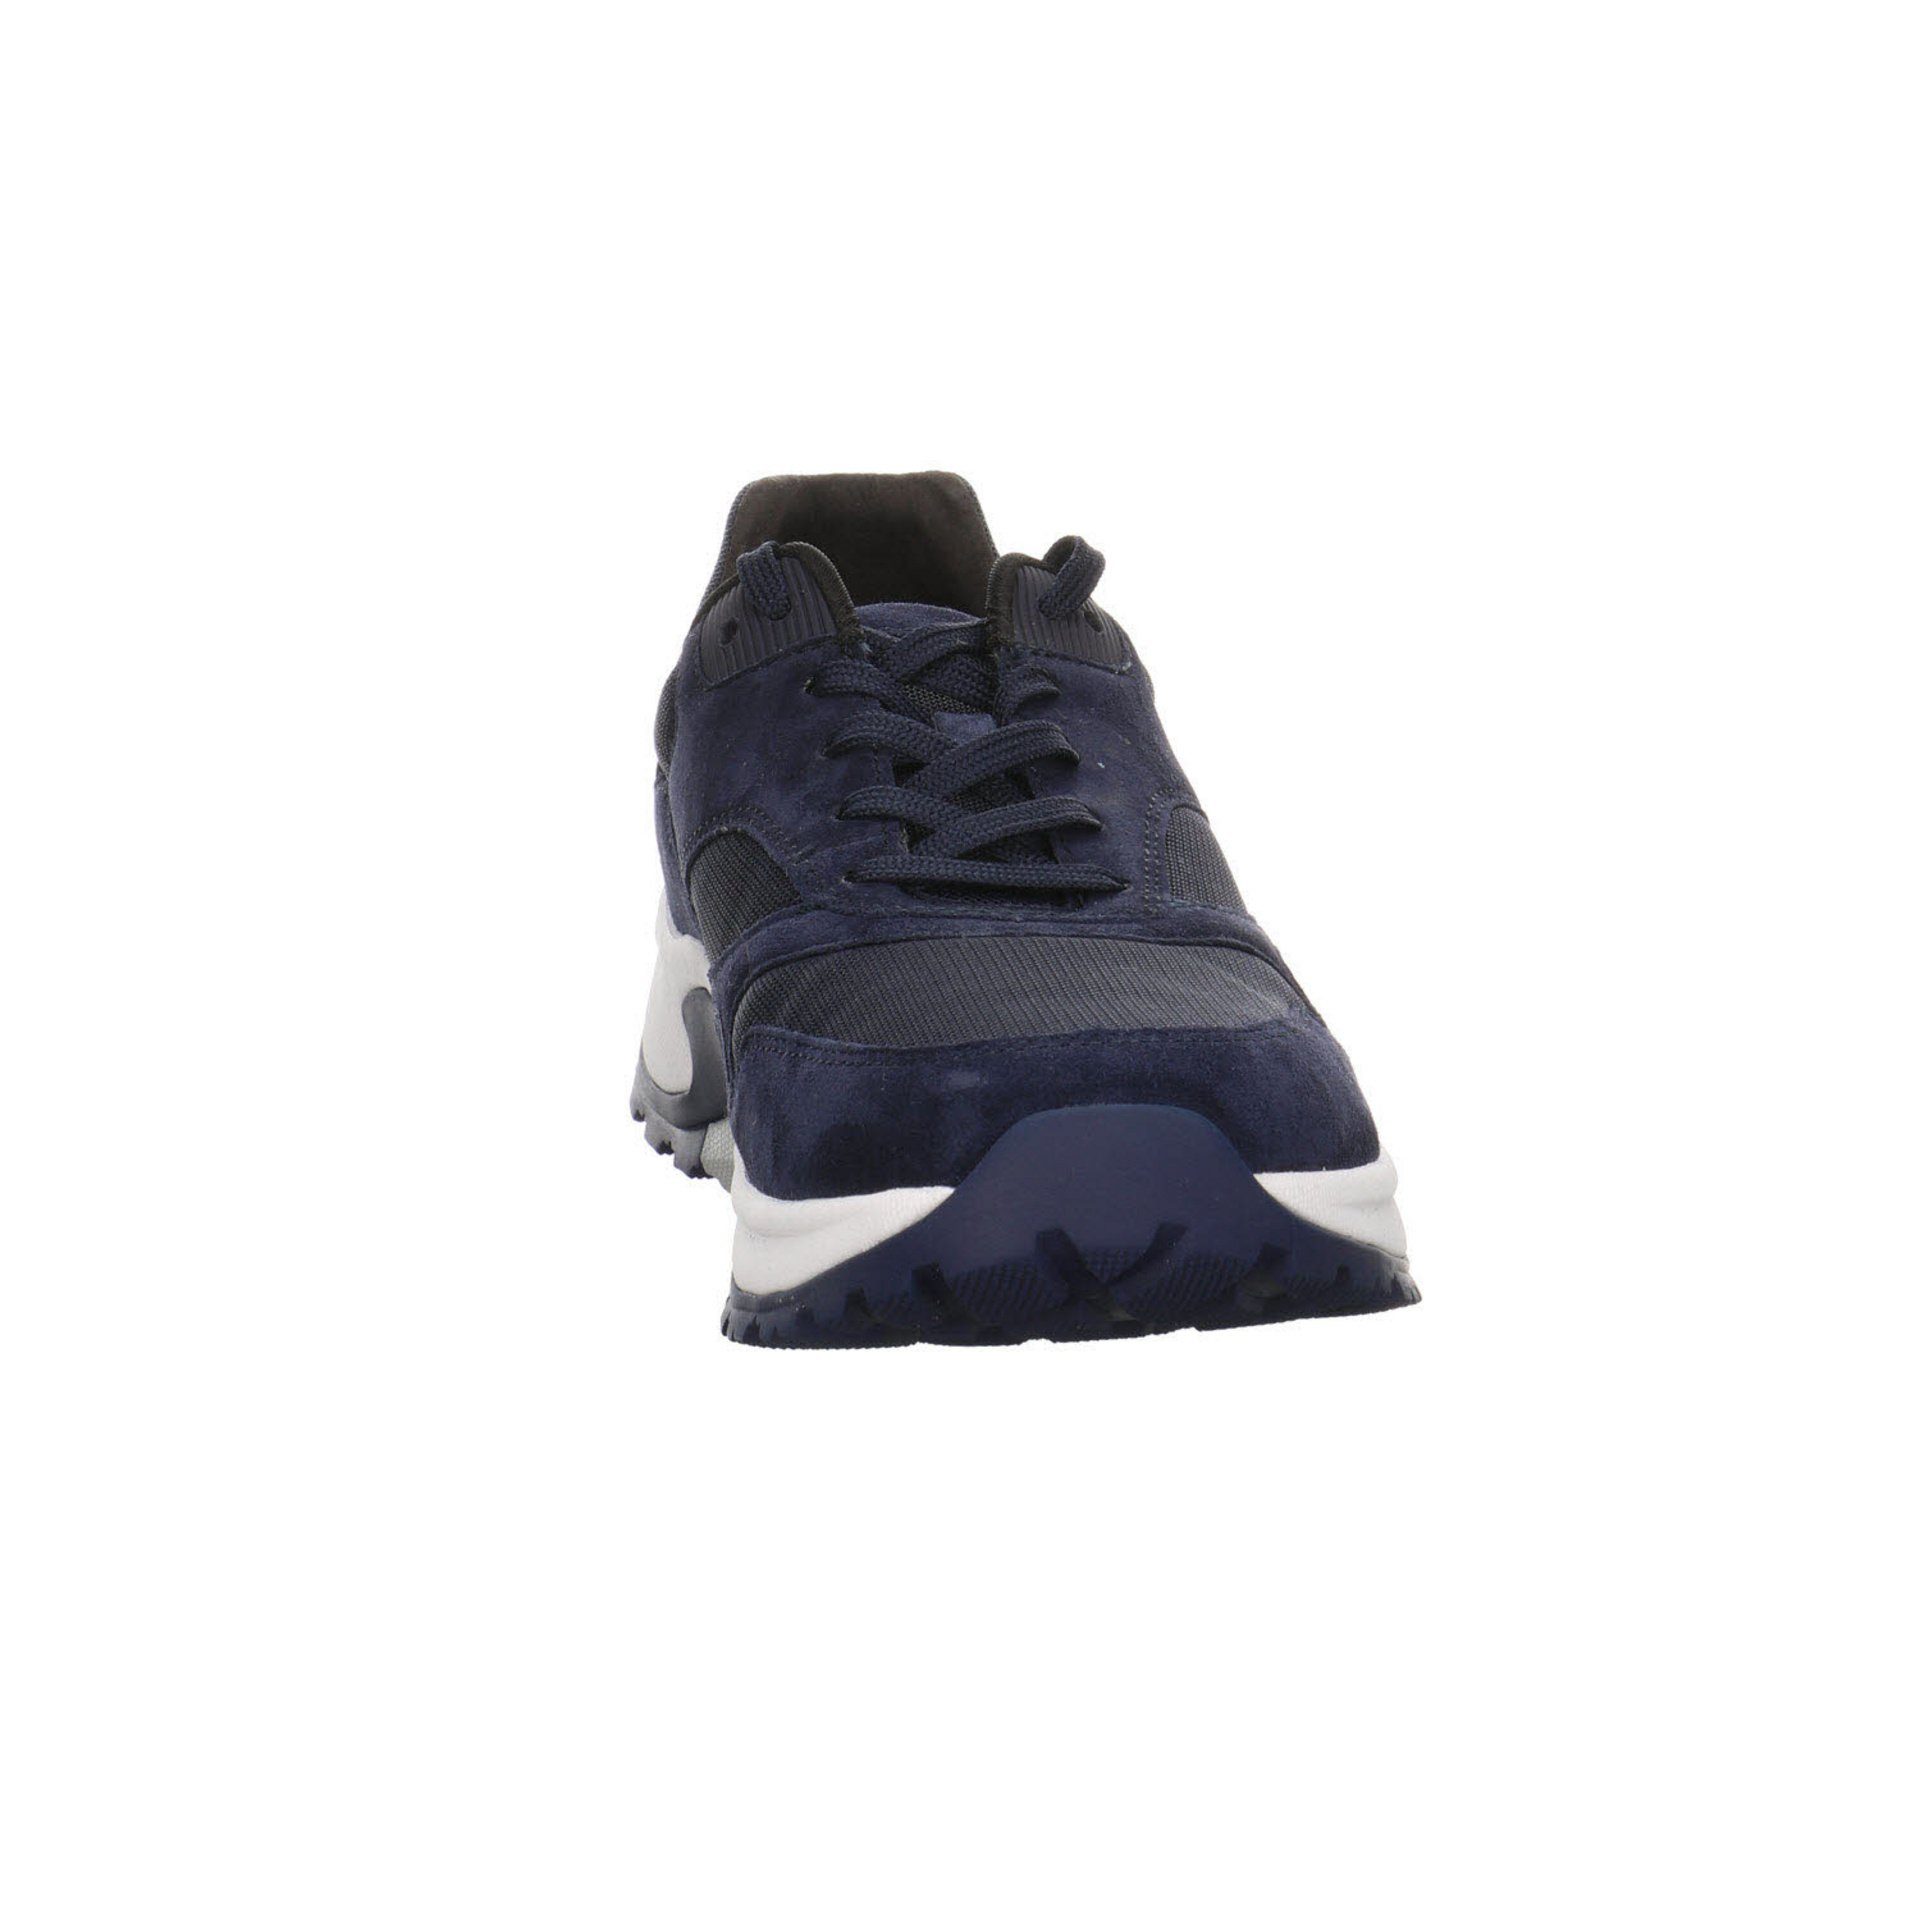 Pius Gabor Herren Sneaker Schuhe Rollingsoft Sneaker blau Schnürschuh Leder-/Textilkombination dunkel